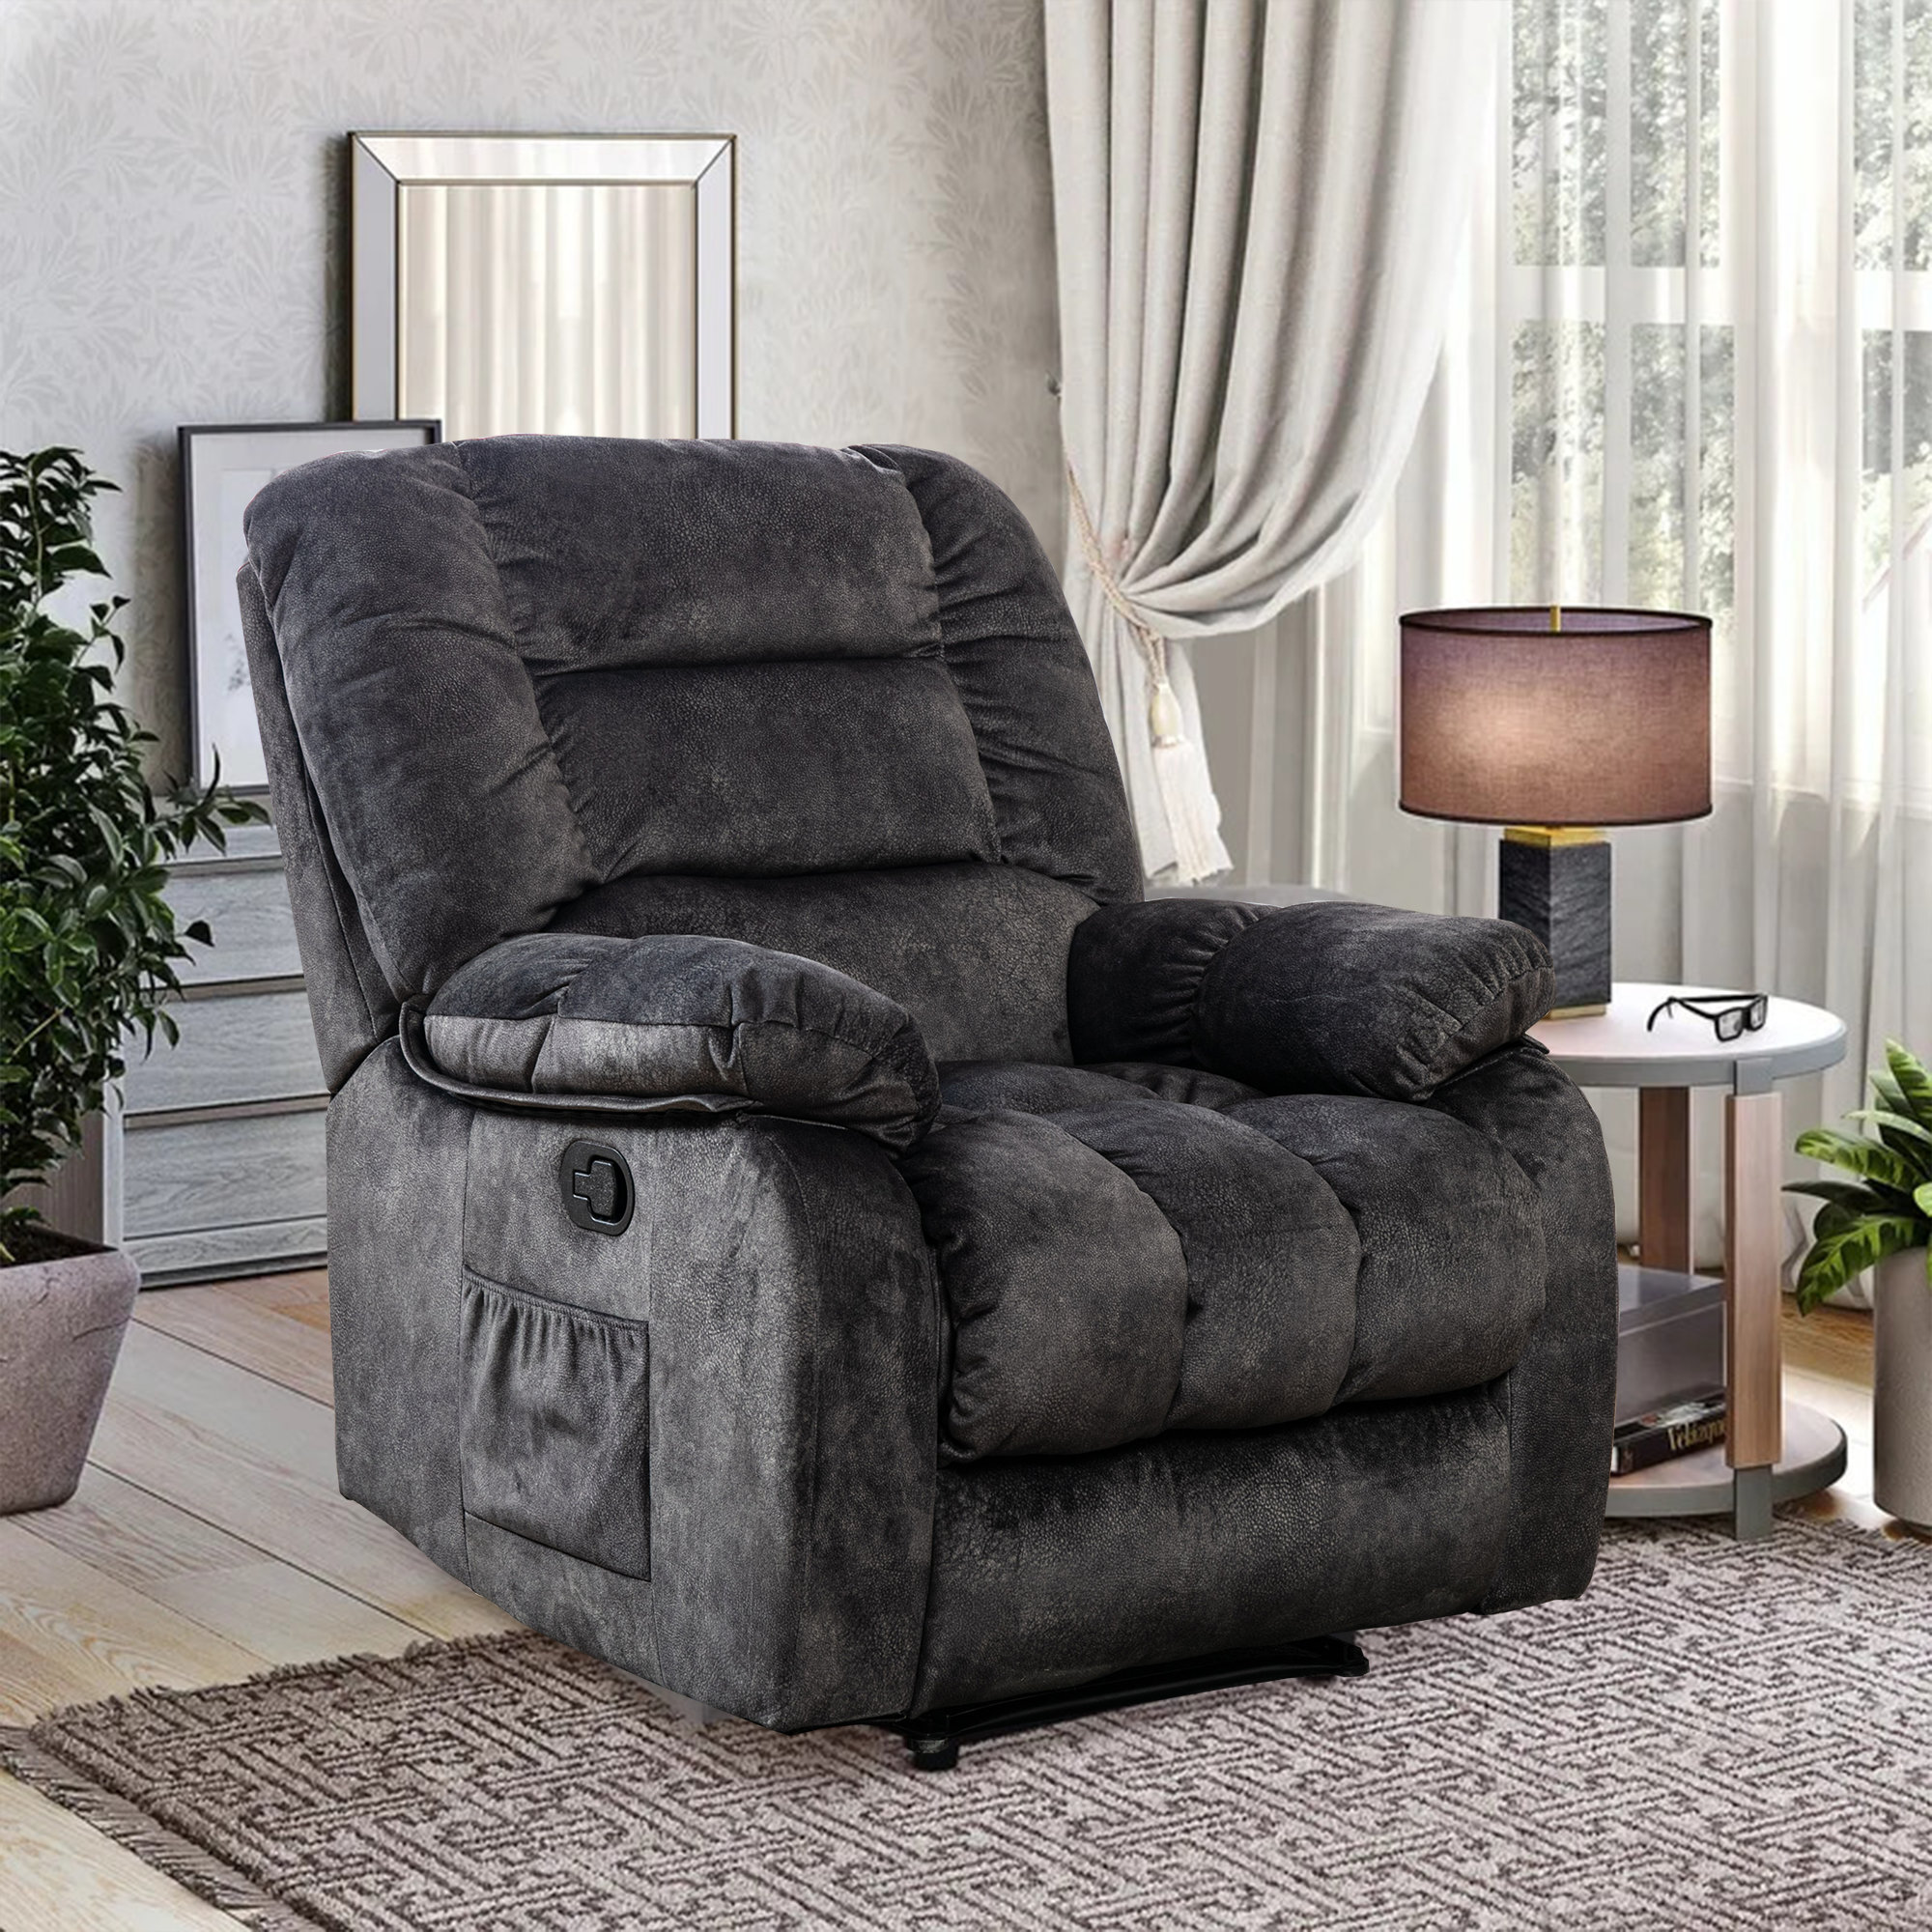 Cushy Tushy Premium Seat Cushion (Black/Light Gray)